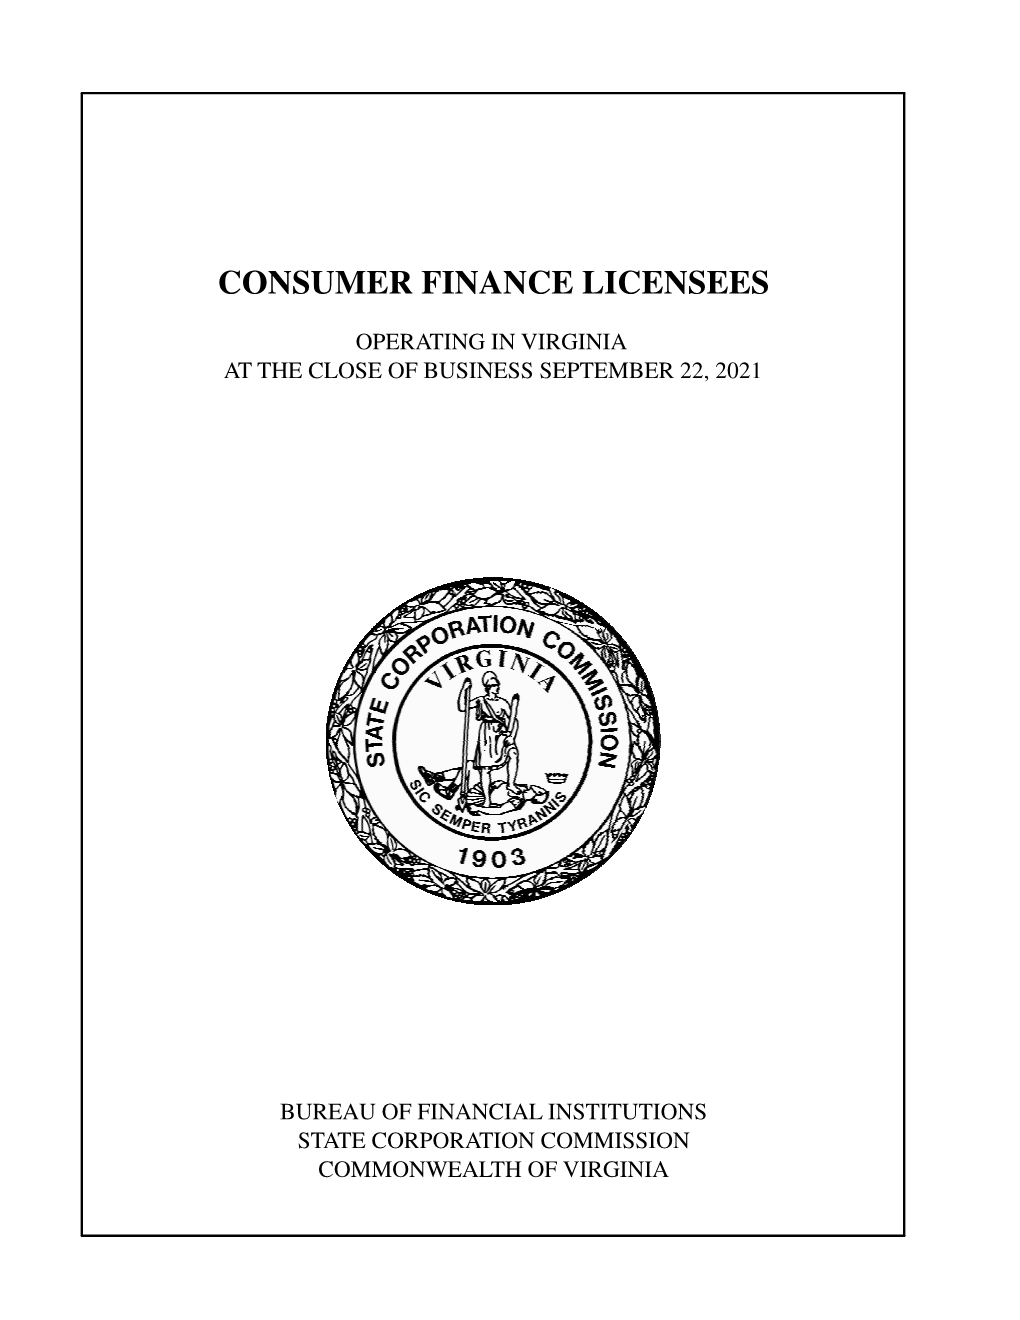 Consumer Finance Companies Licensed in Virginia